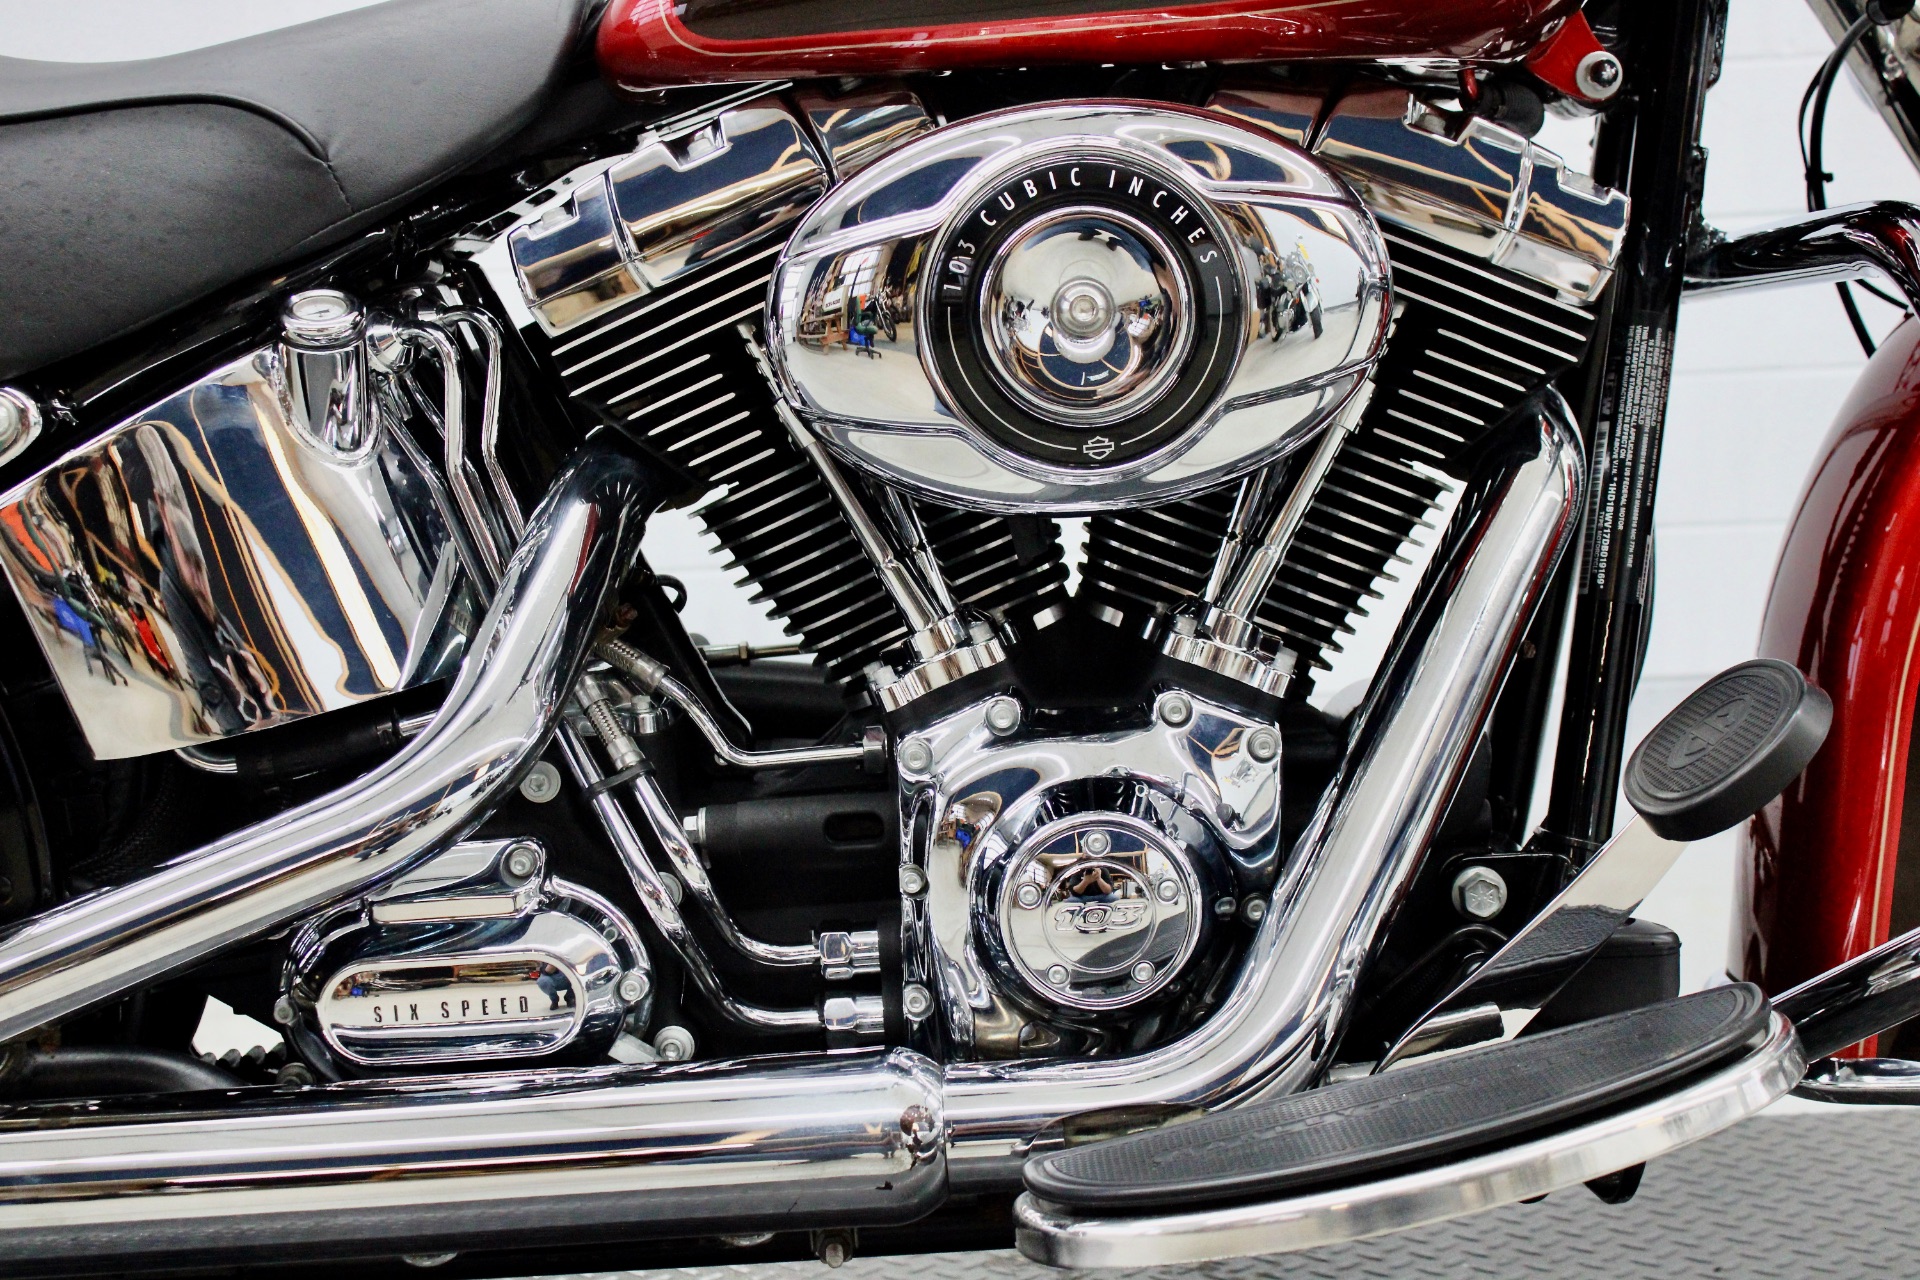 2013 Harley-Davidson Heritage Softail® Classic in Fredericksburg, Virginia - Photo 14